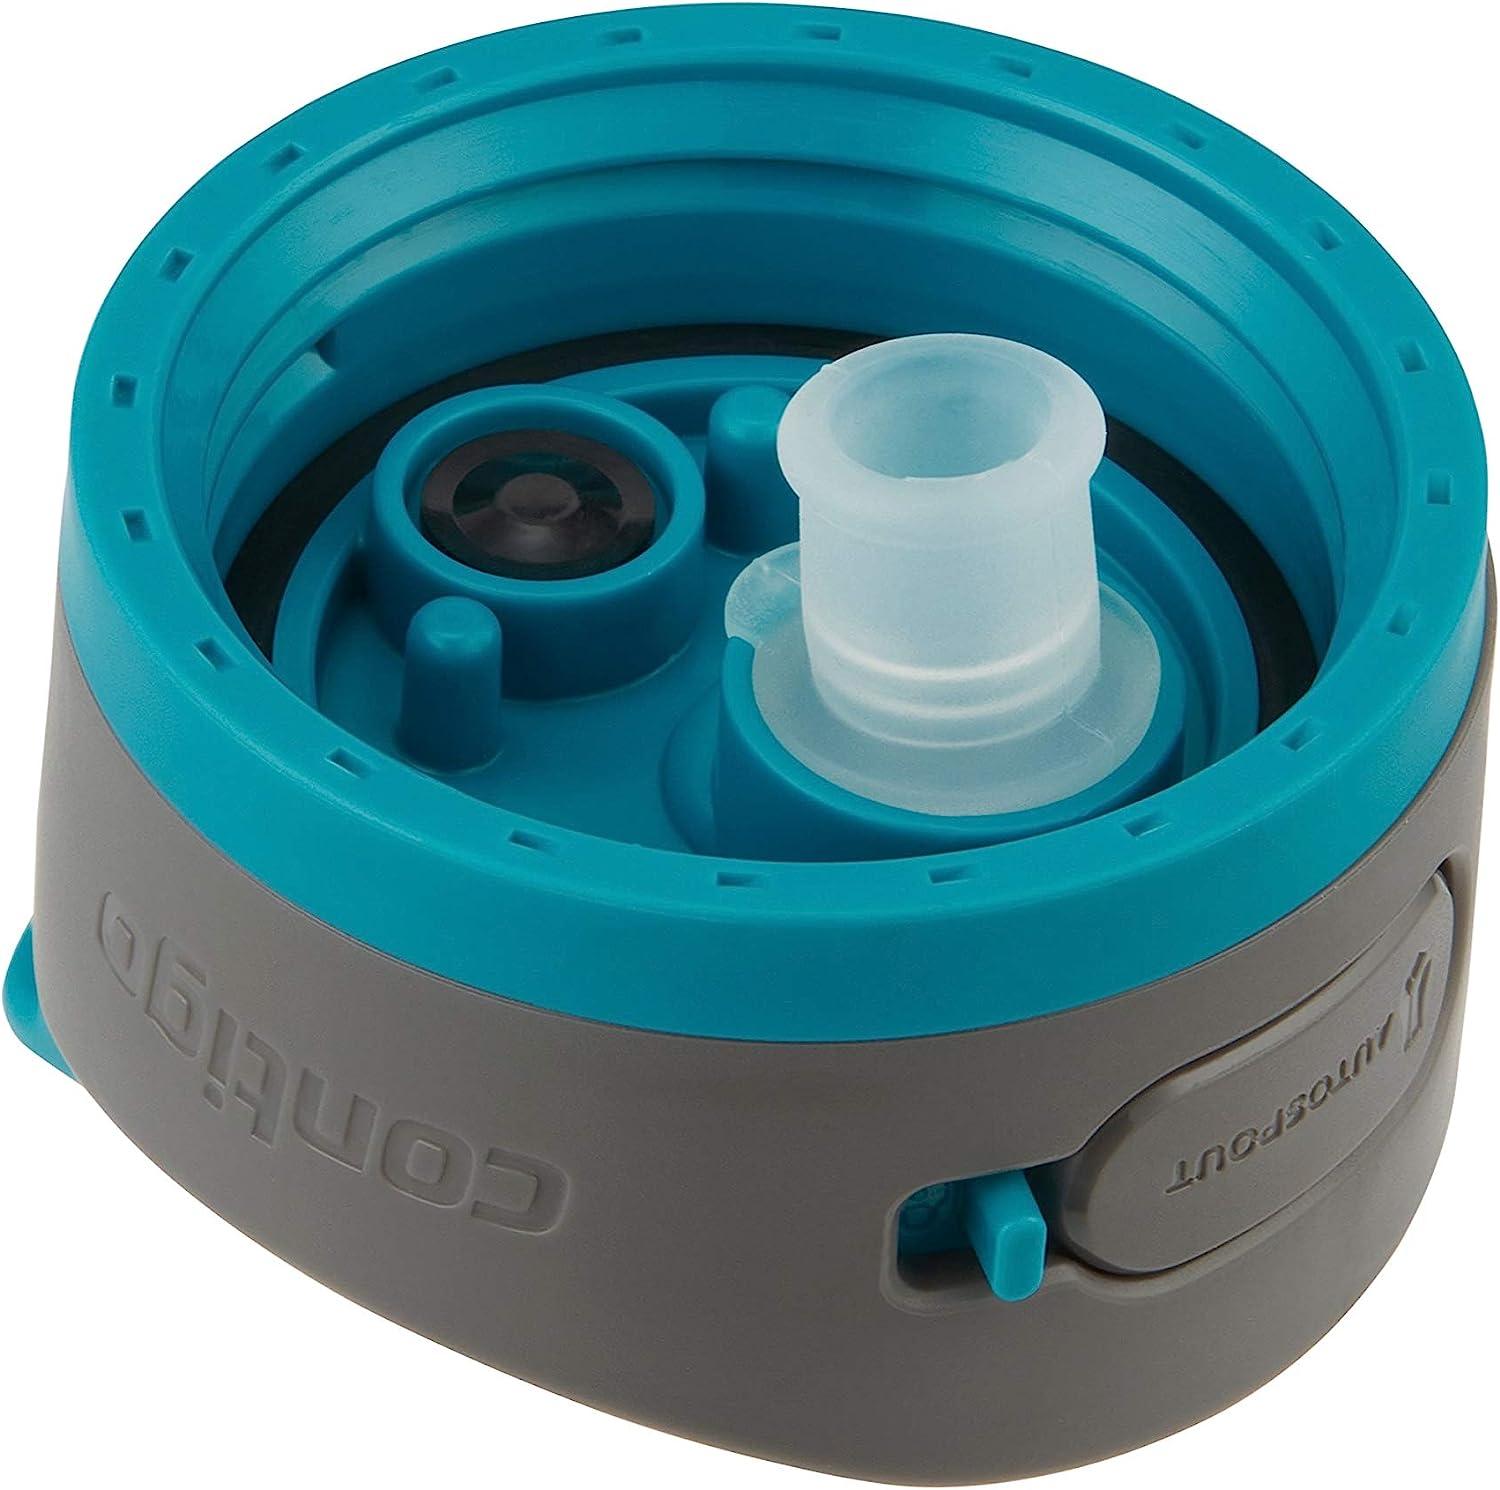  Contigo Ashland 2.0 Leak-Proof Water Bottle with Lid